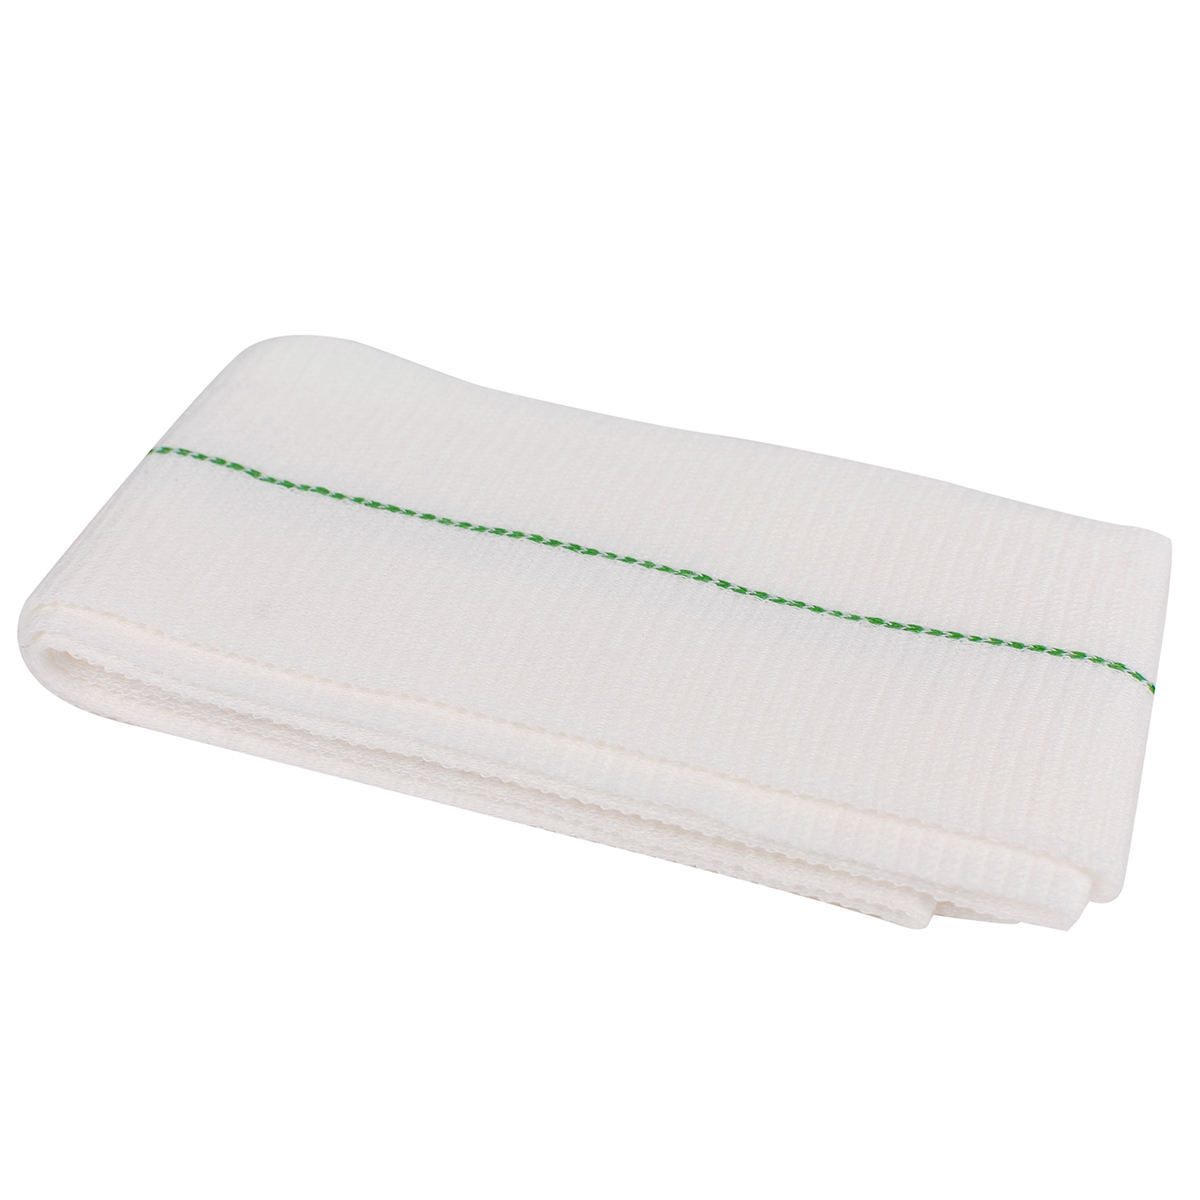 5cm x 1m Tubifast Tubular Bandage for Small and Medium Limbs